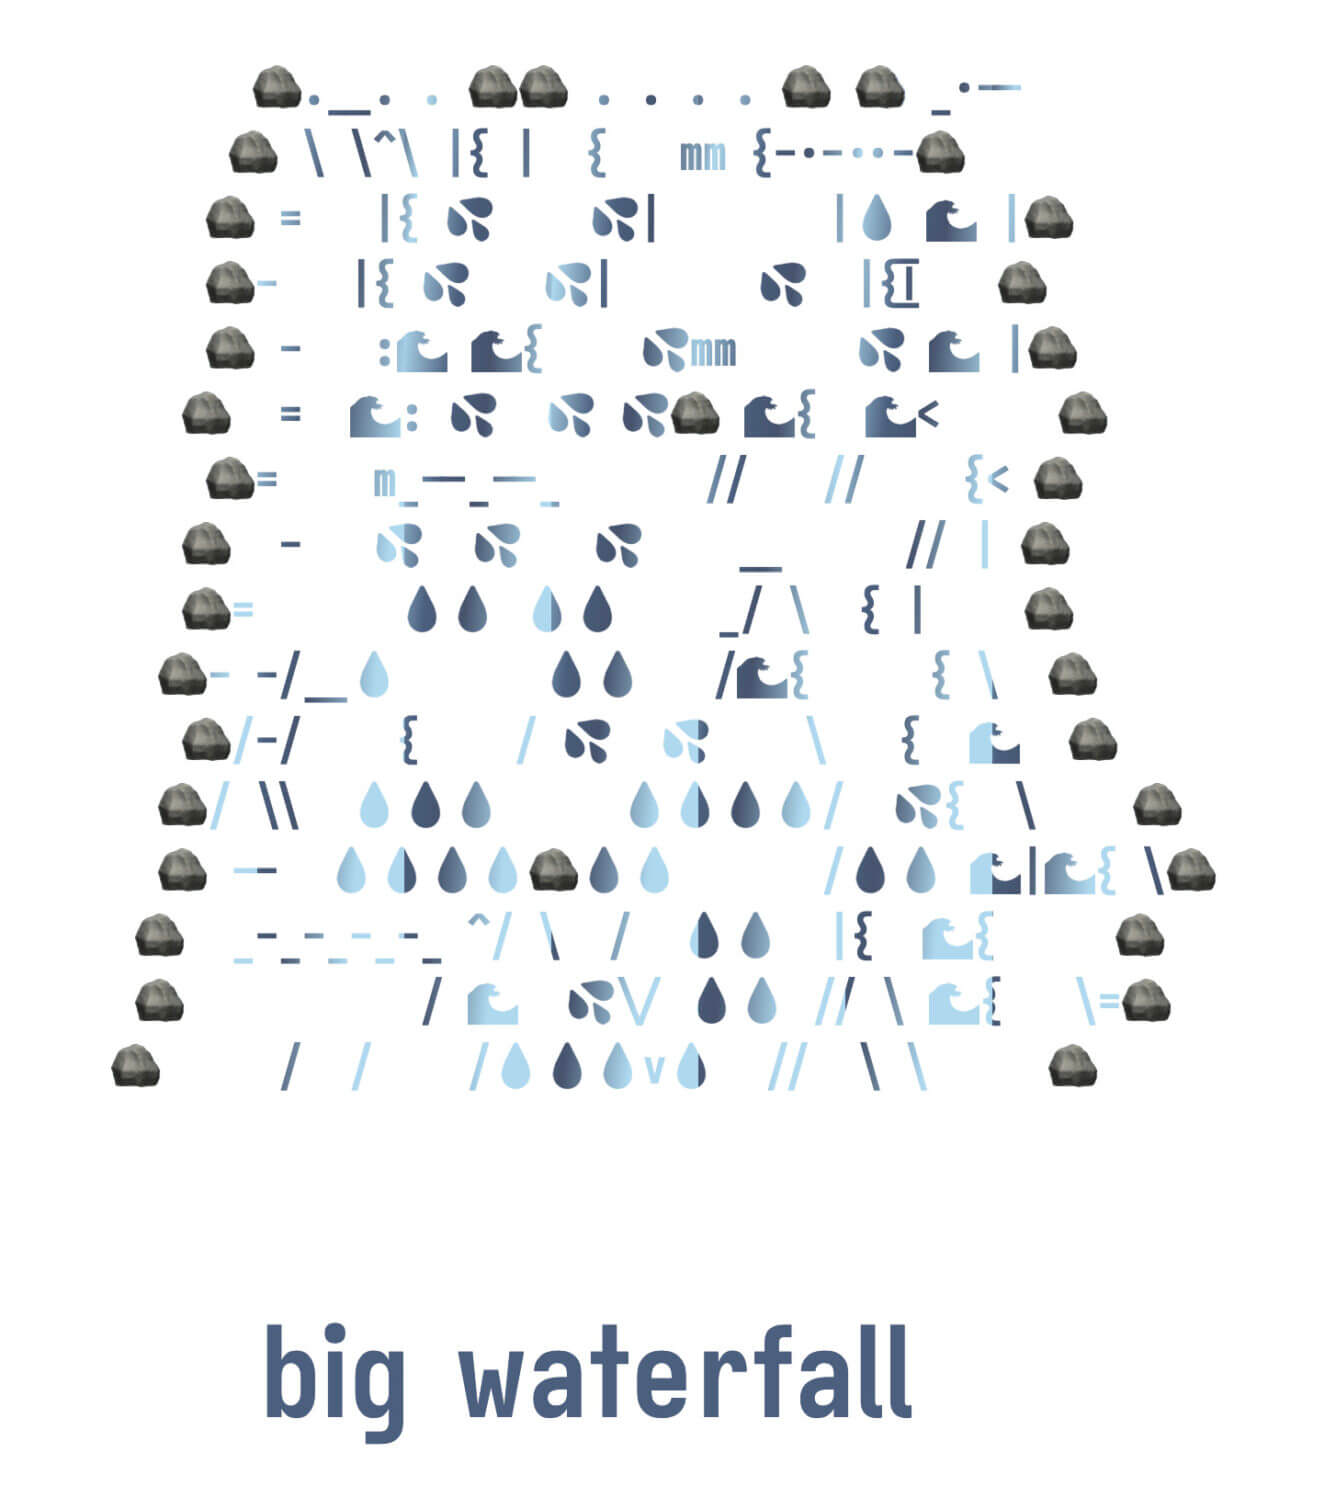 an ascii art waterfall made of emojis